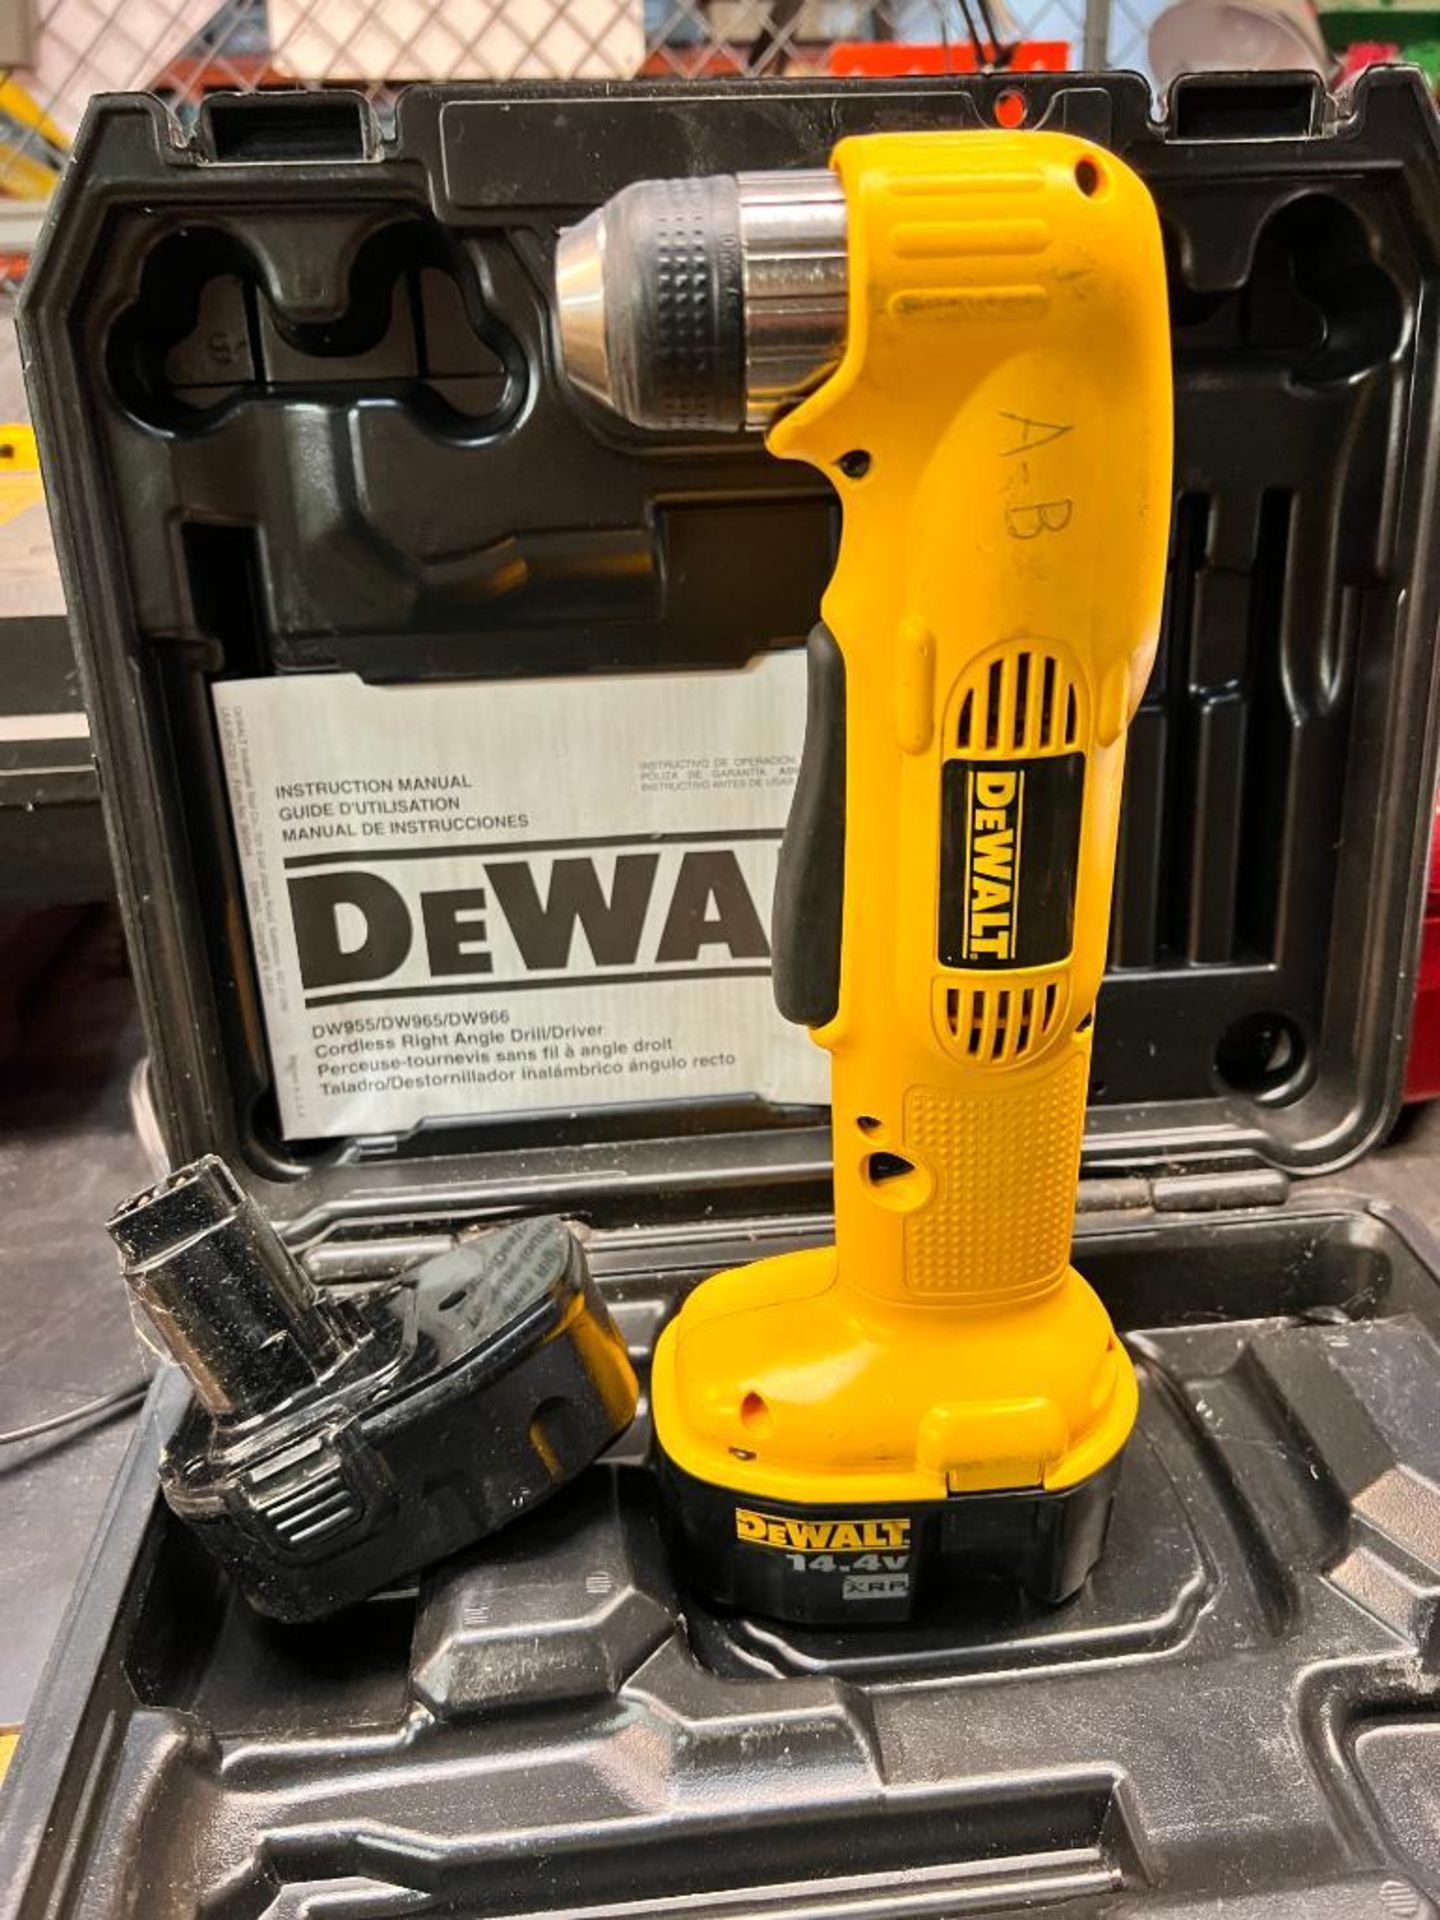 Dewalt Cordless Right Angle Drill, Model DW966, S/N 24518, w/ (2) 14.4 V Batteries